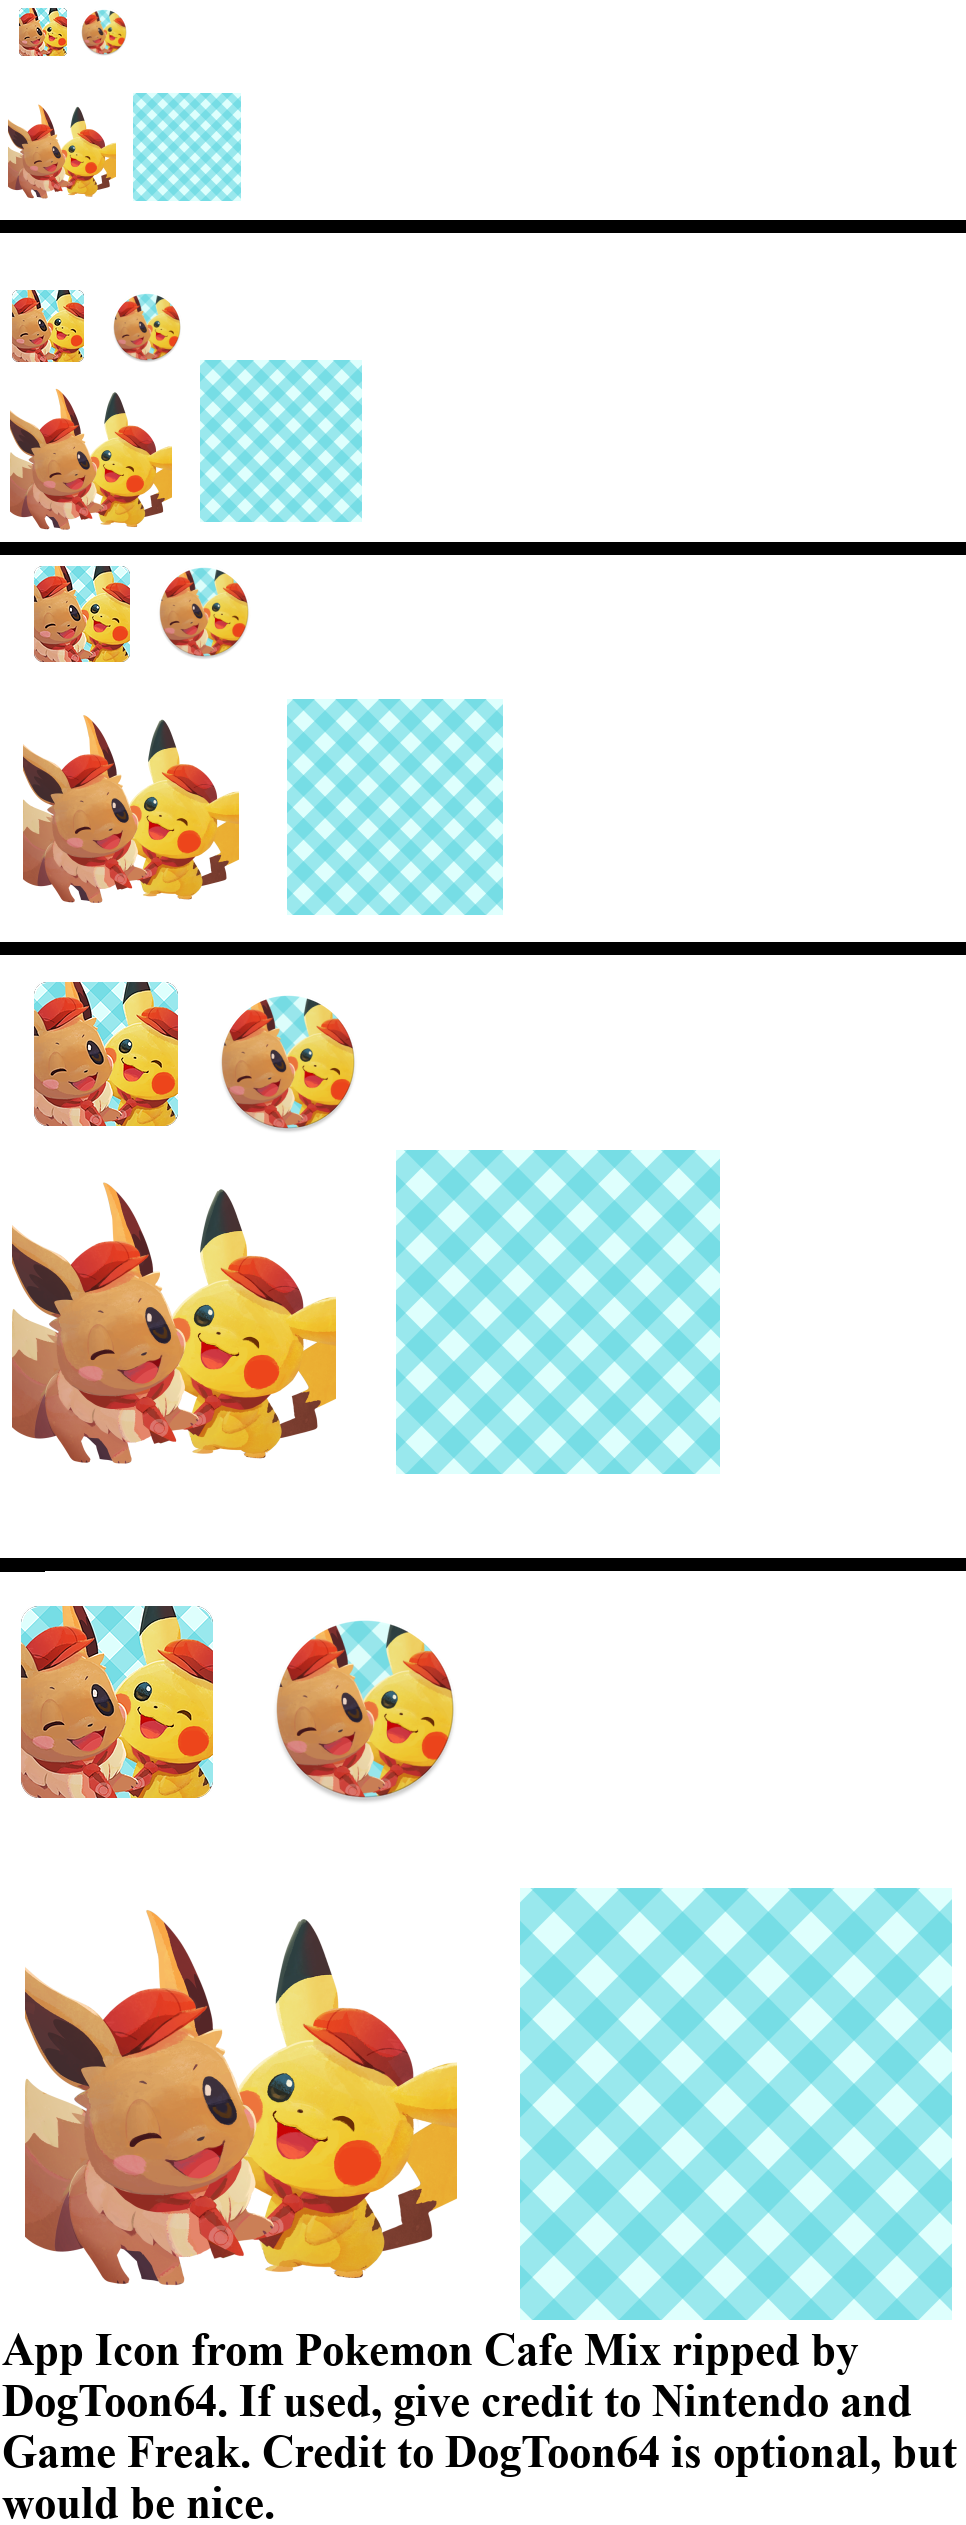 Pokémon Café Mix - App Icon